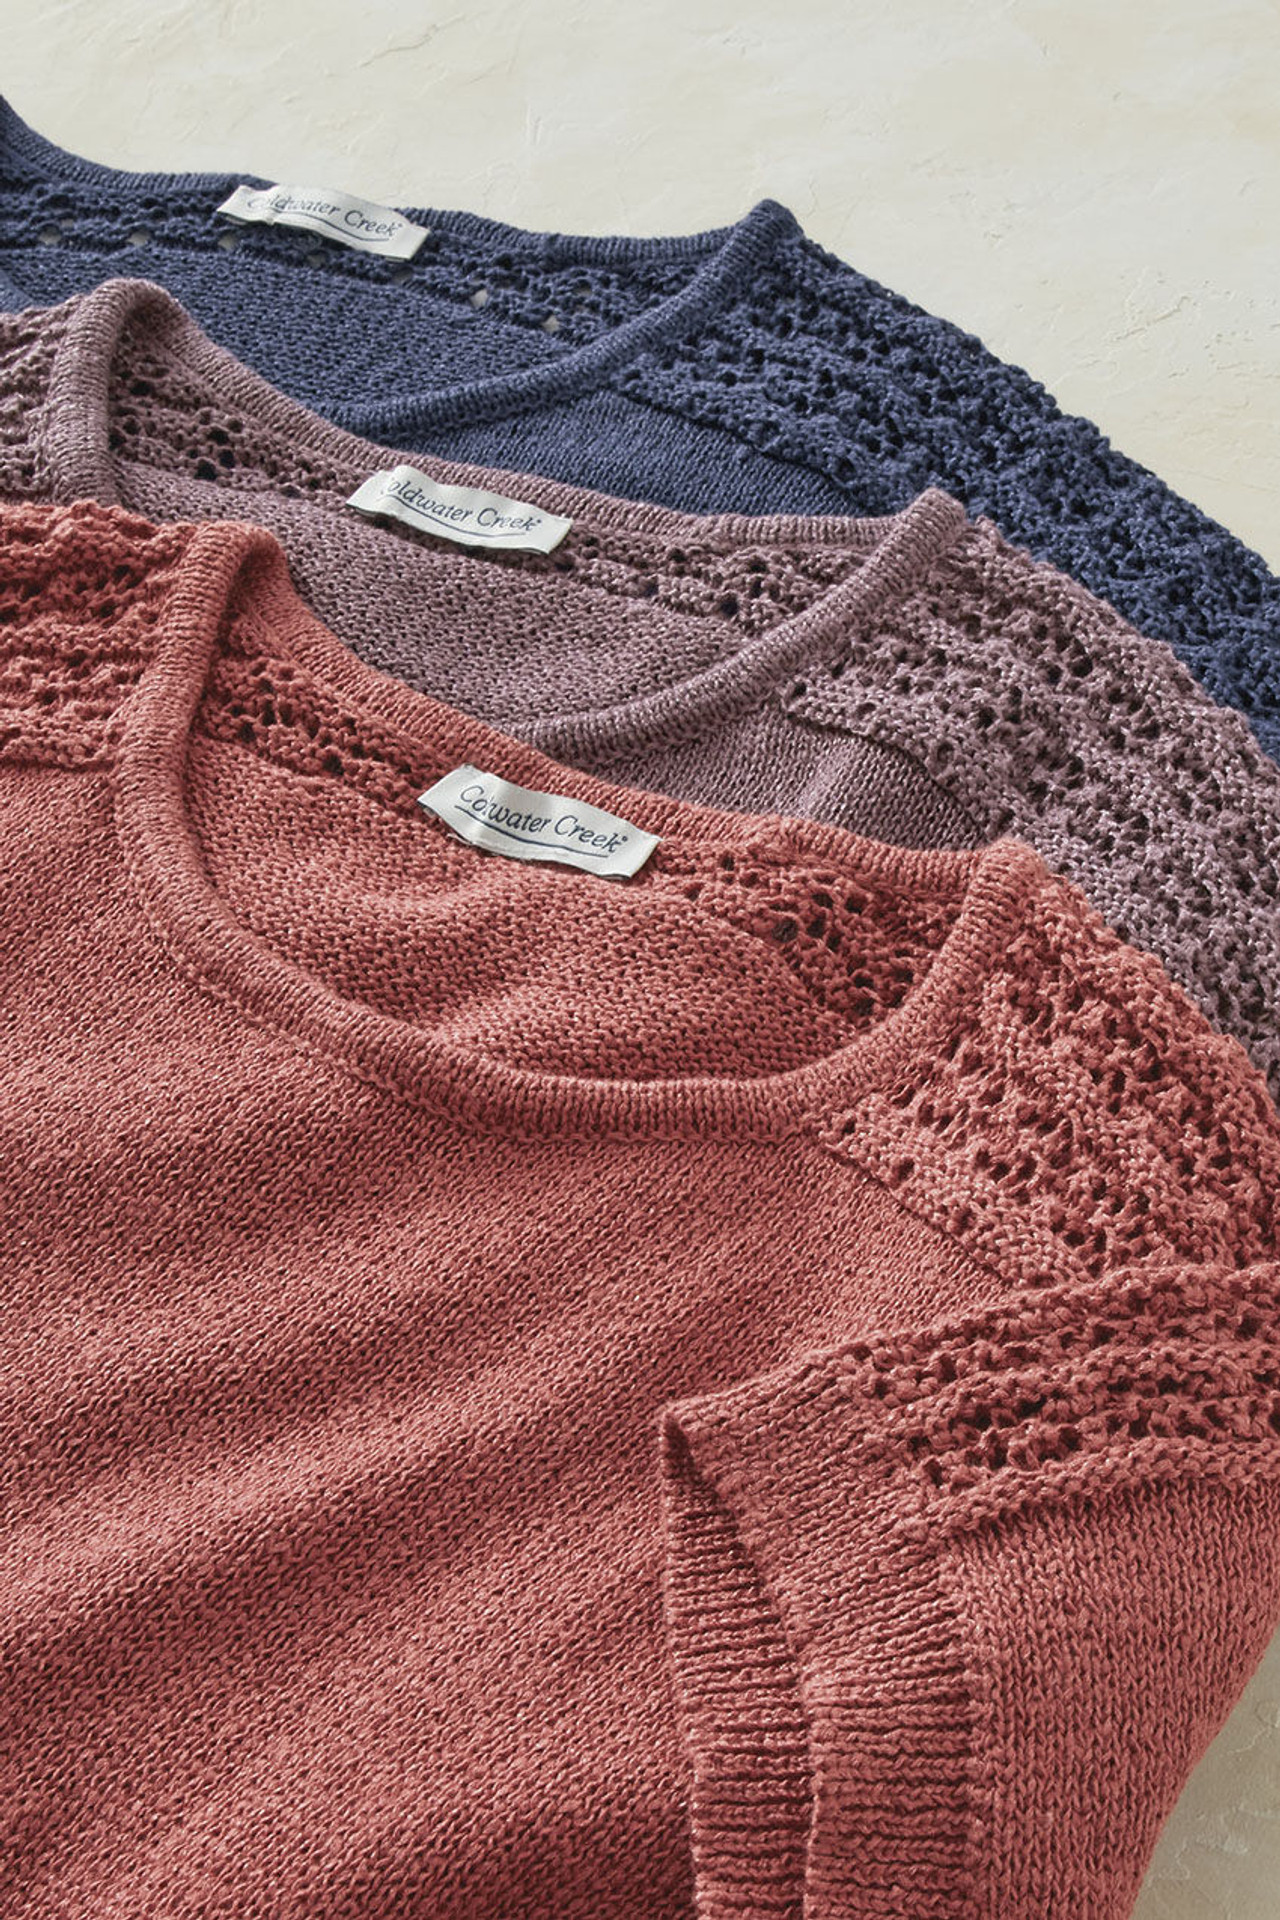 Crocheted Slub Sweater